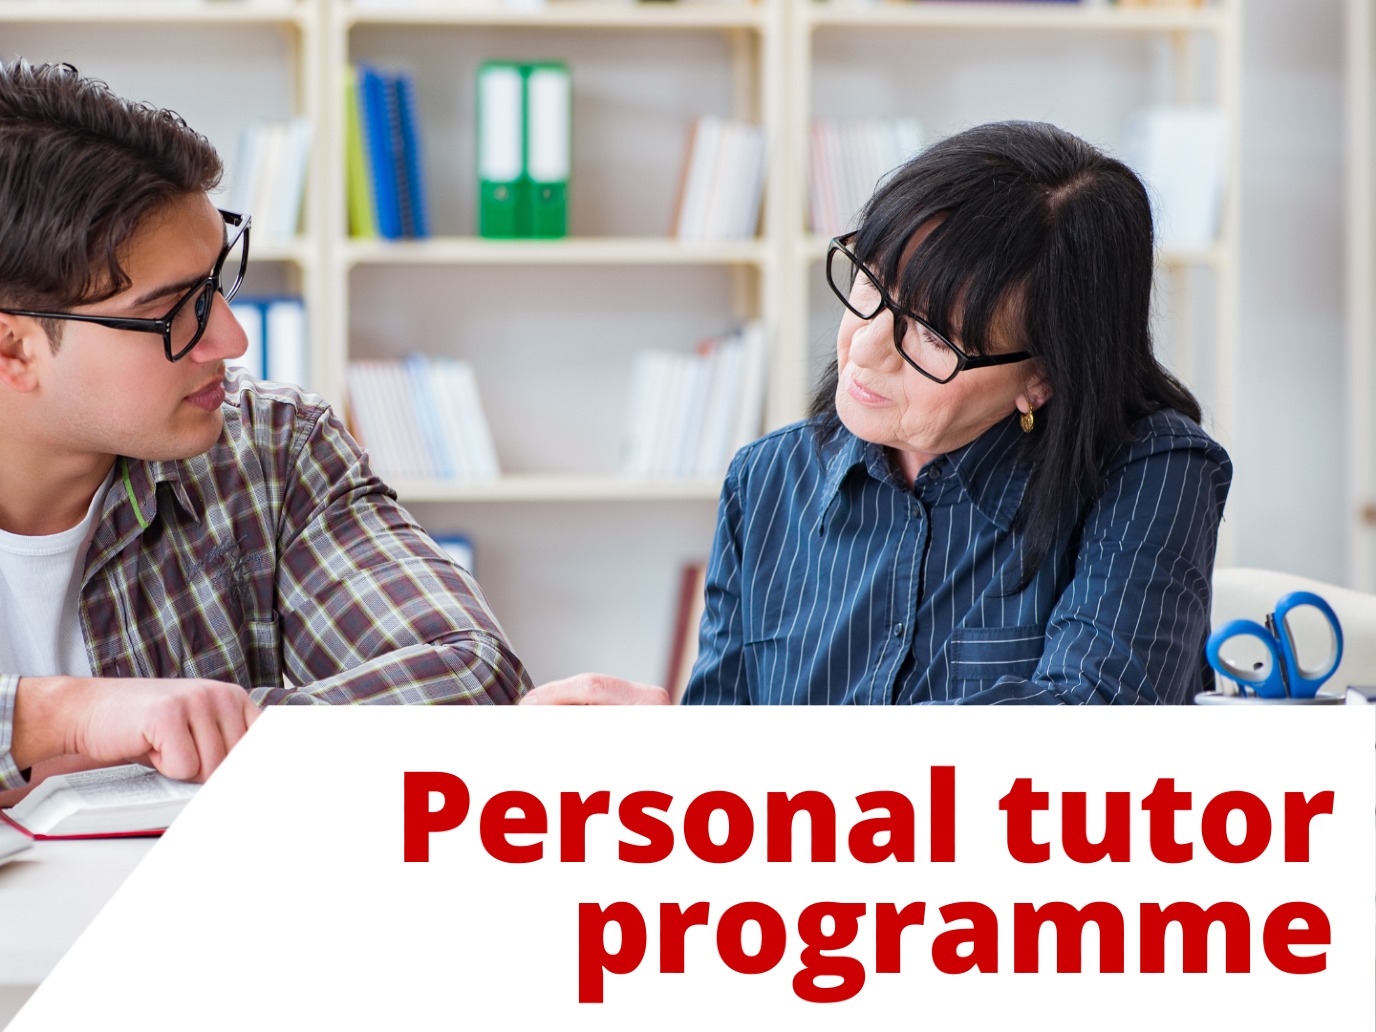 Personal tutor programme